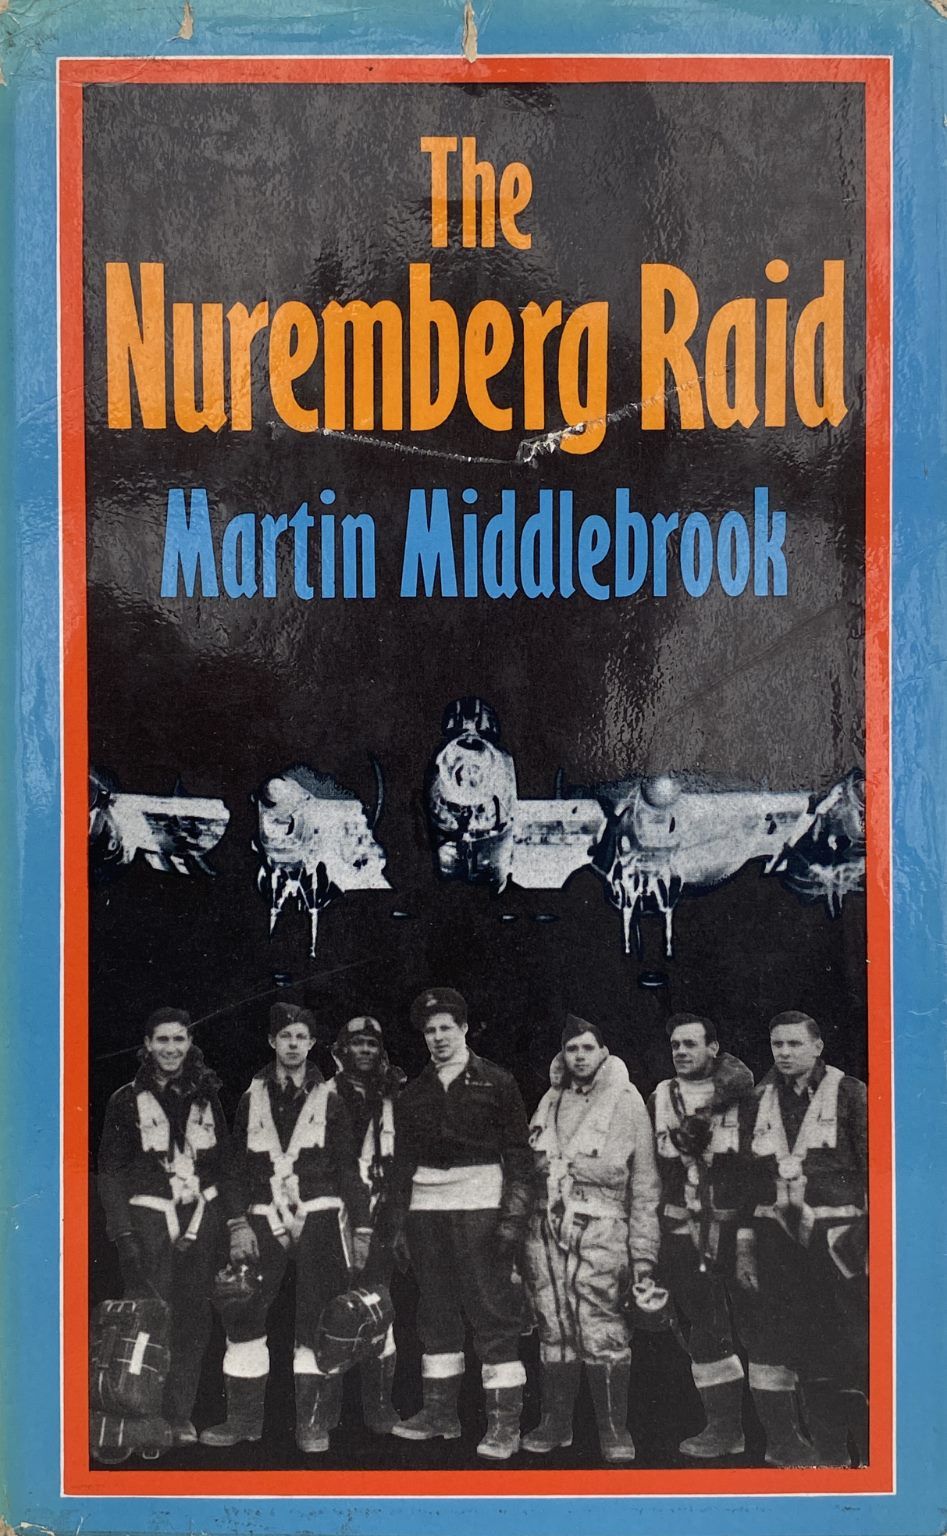 THE NUREMBERG RAID 30-31 March 1944